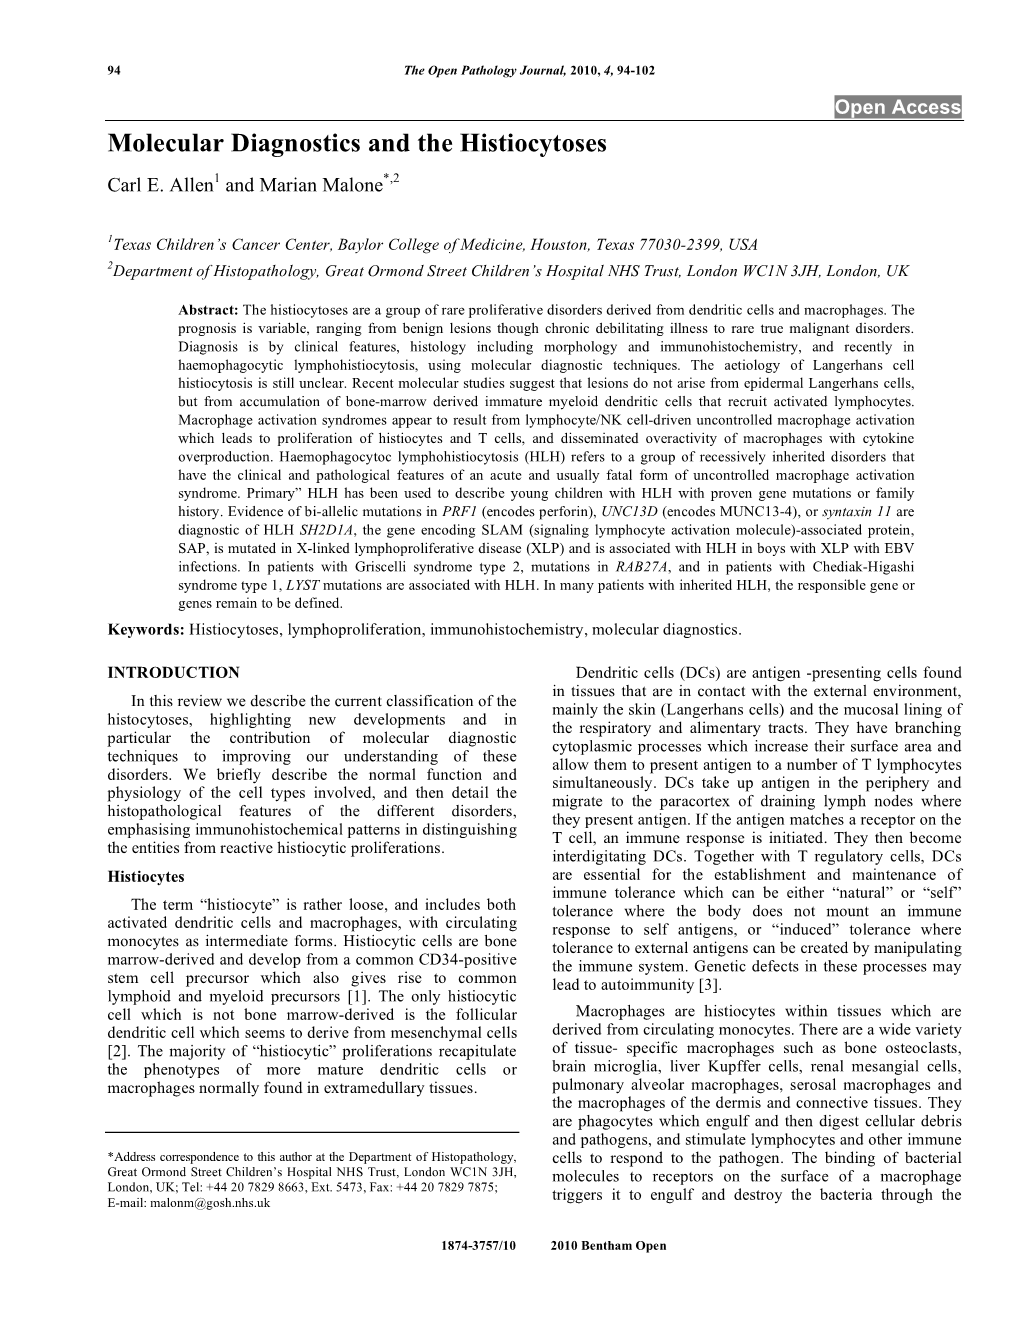 Molecular Diagnostics and the Histiocytoses Carl E